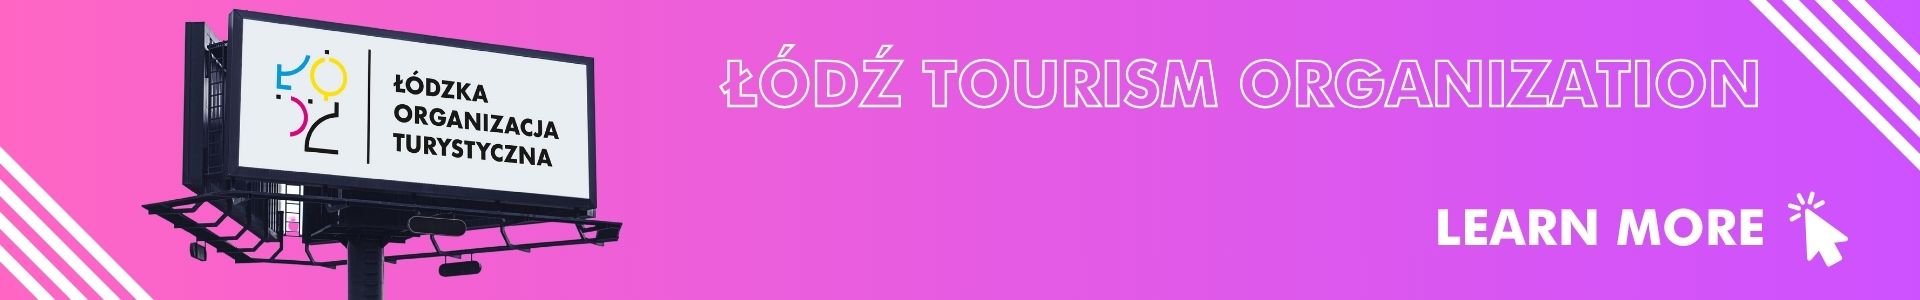 lodz tourism organization